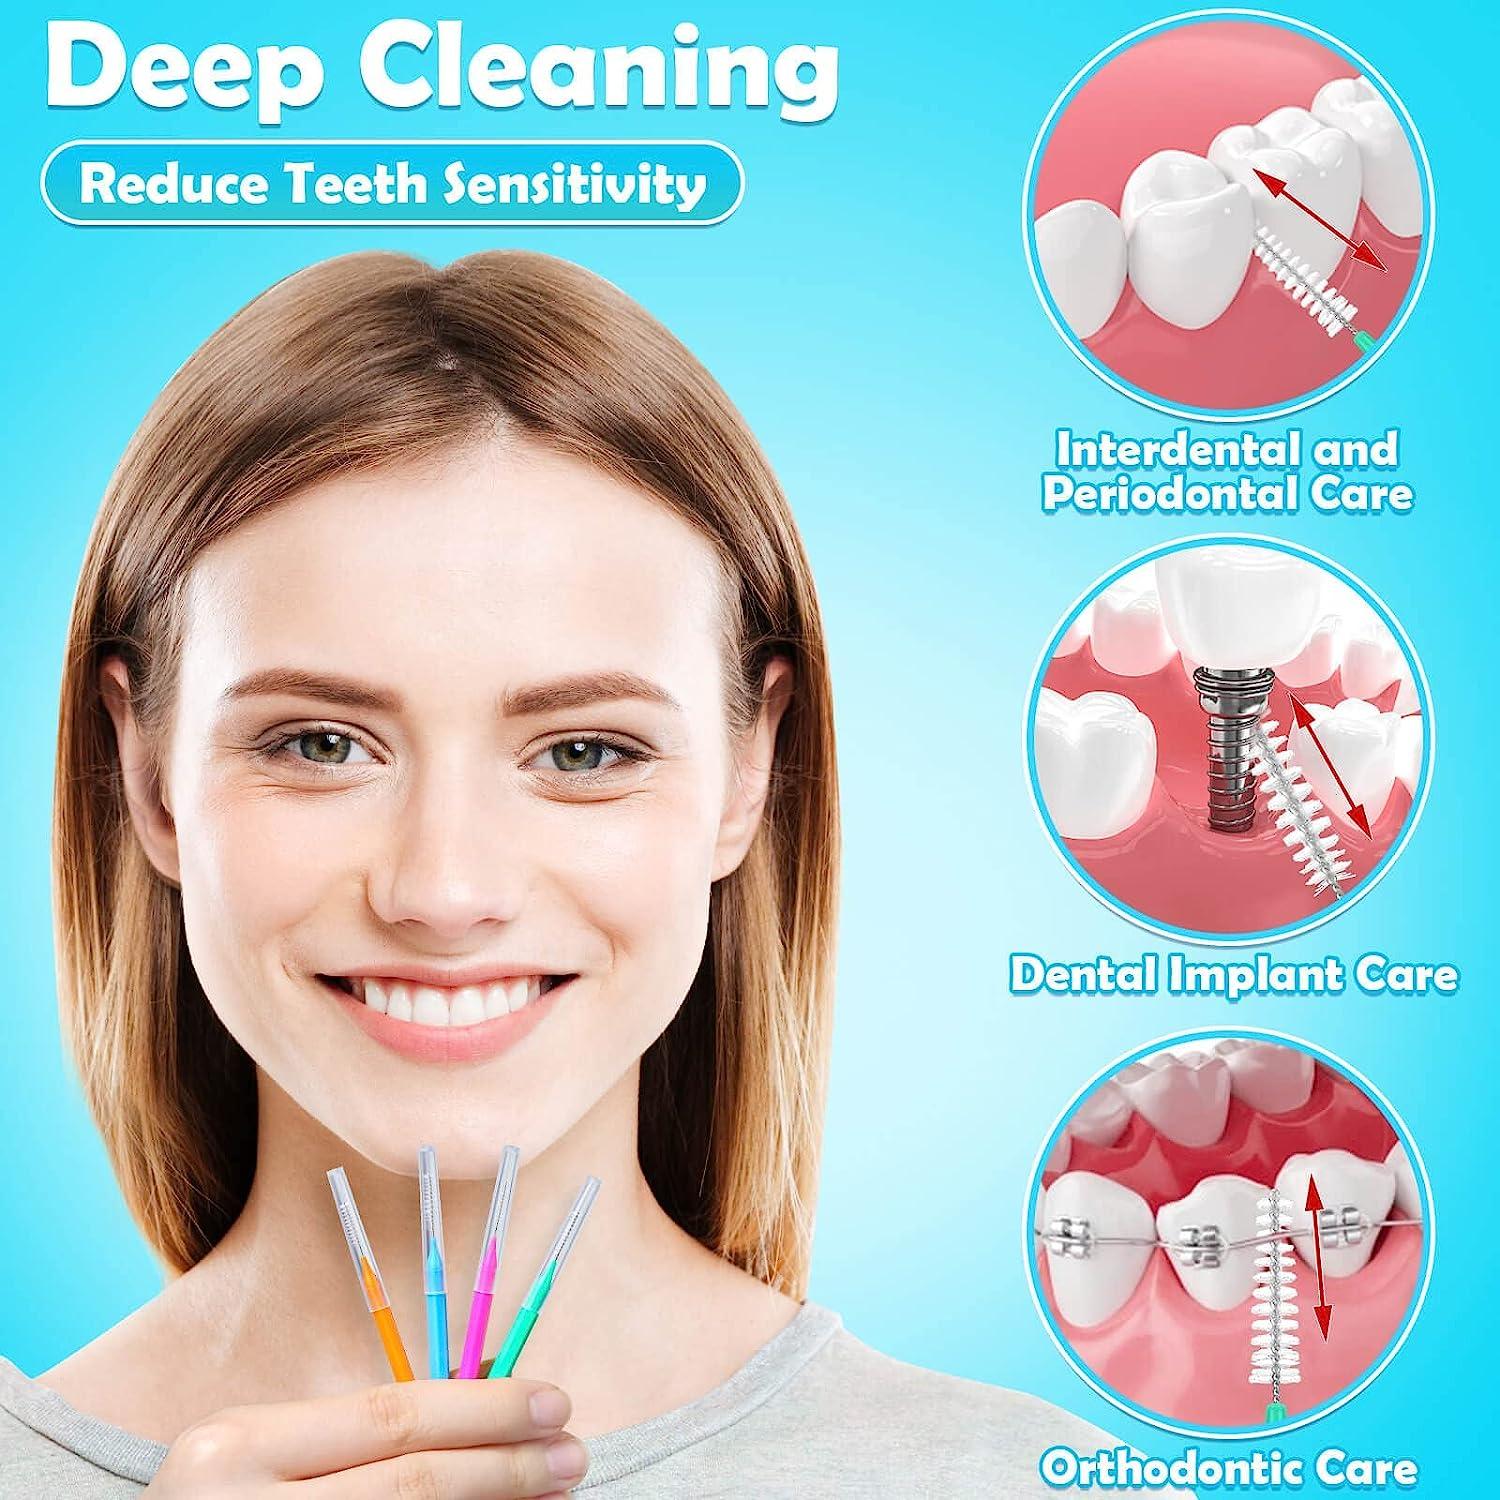 Dental Interdental Brushes Soft Biodegradable Dental Floss Teeth